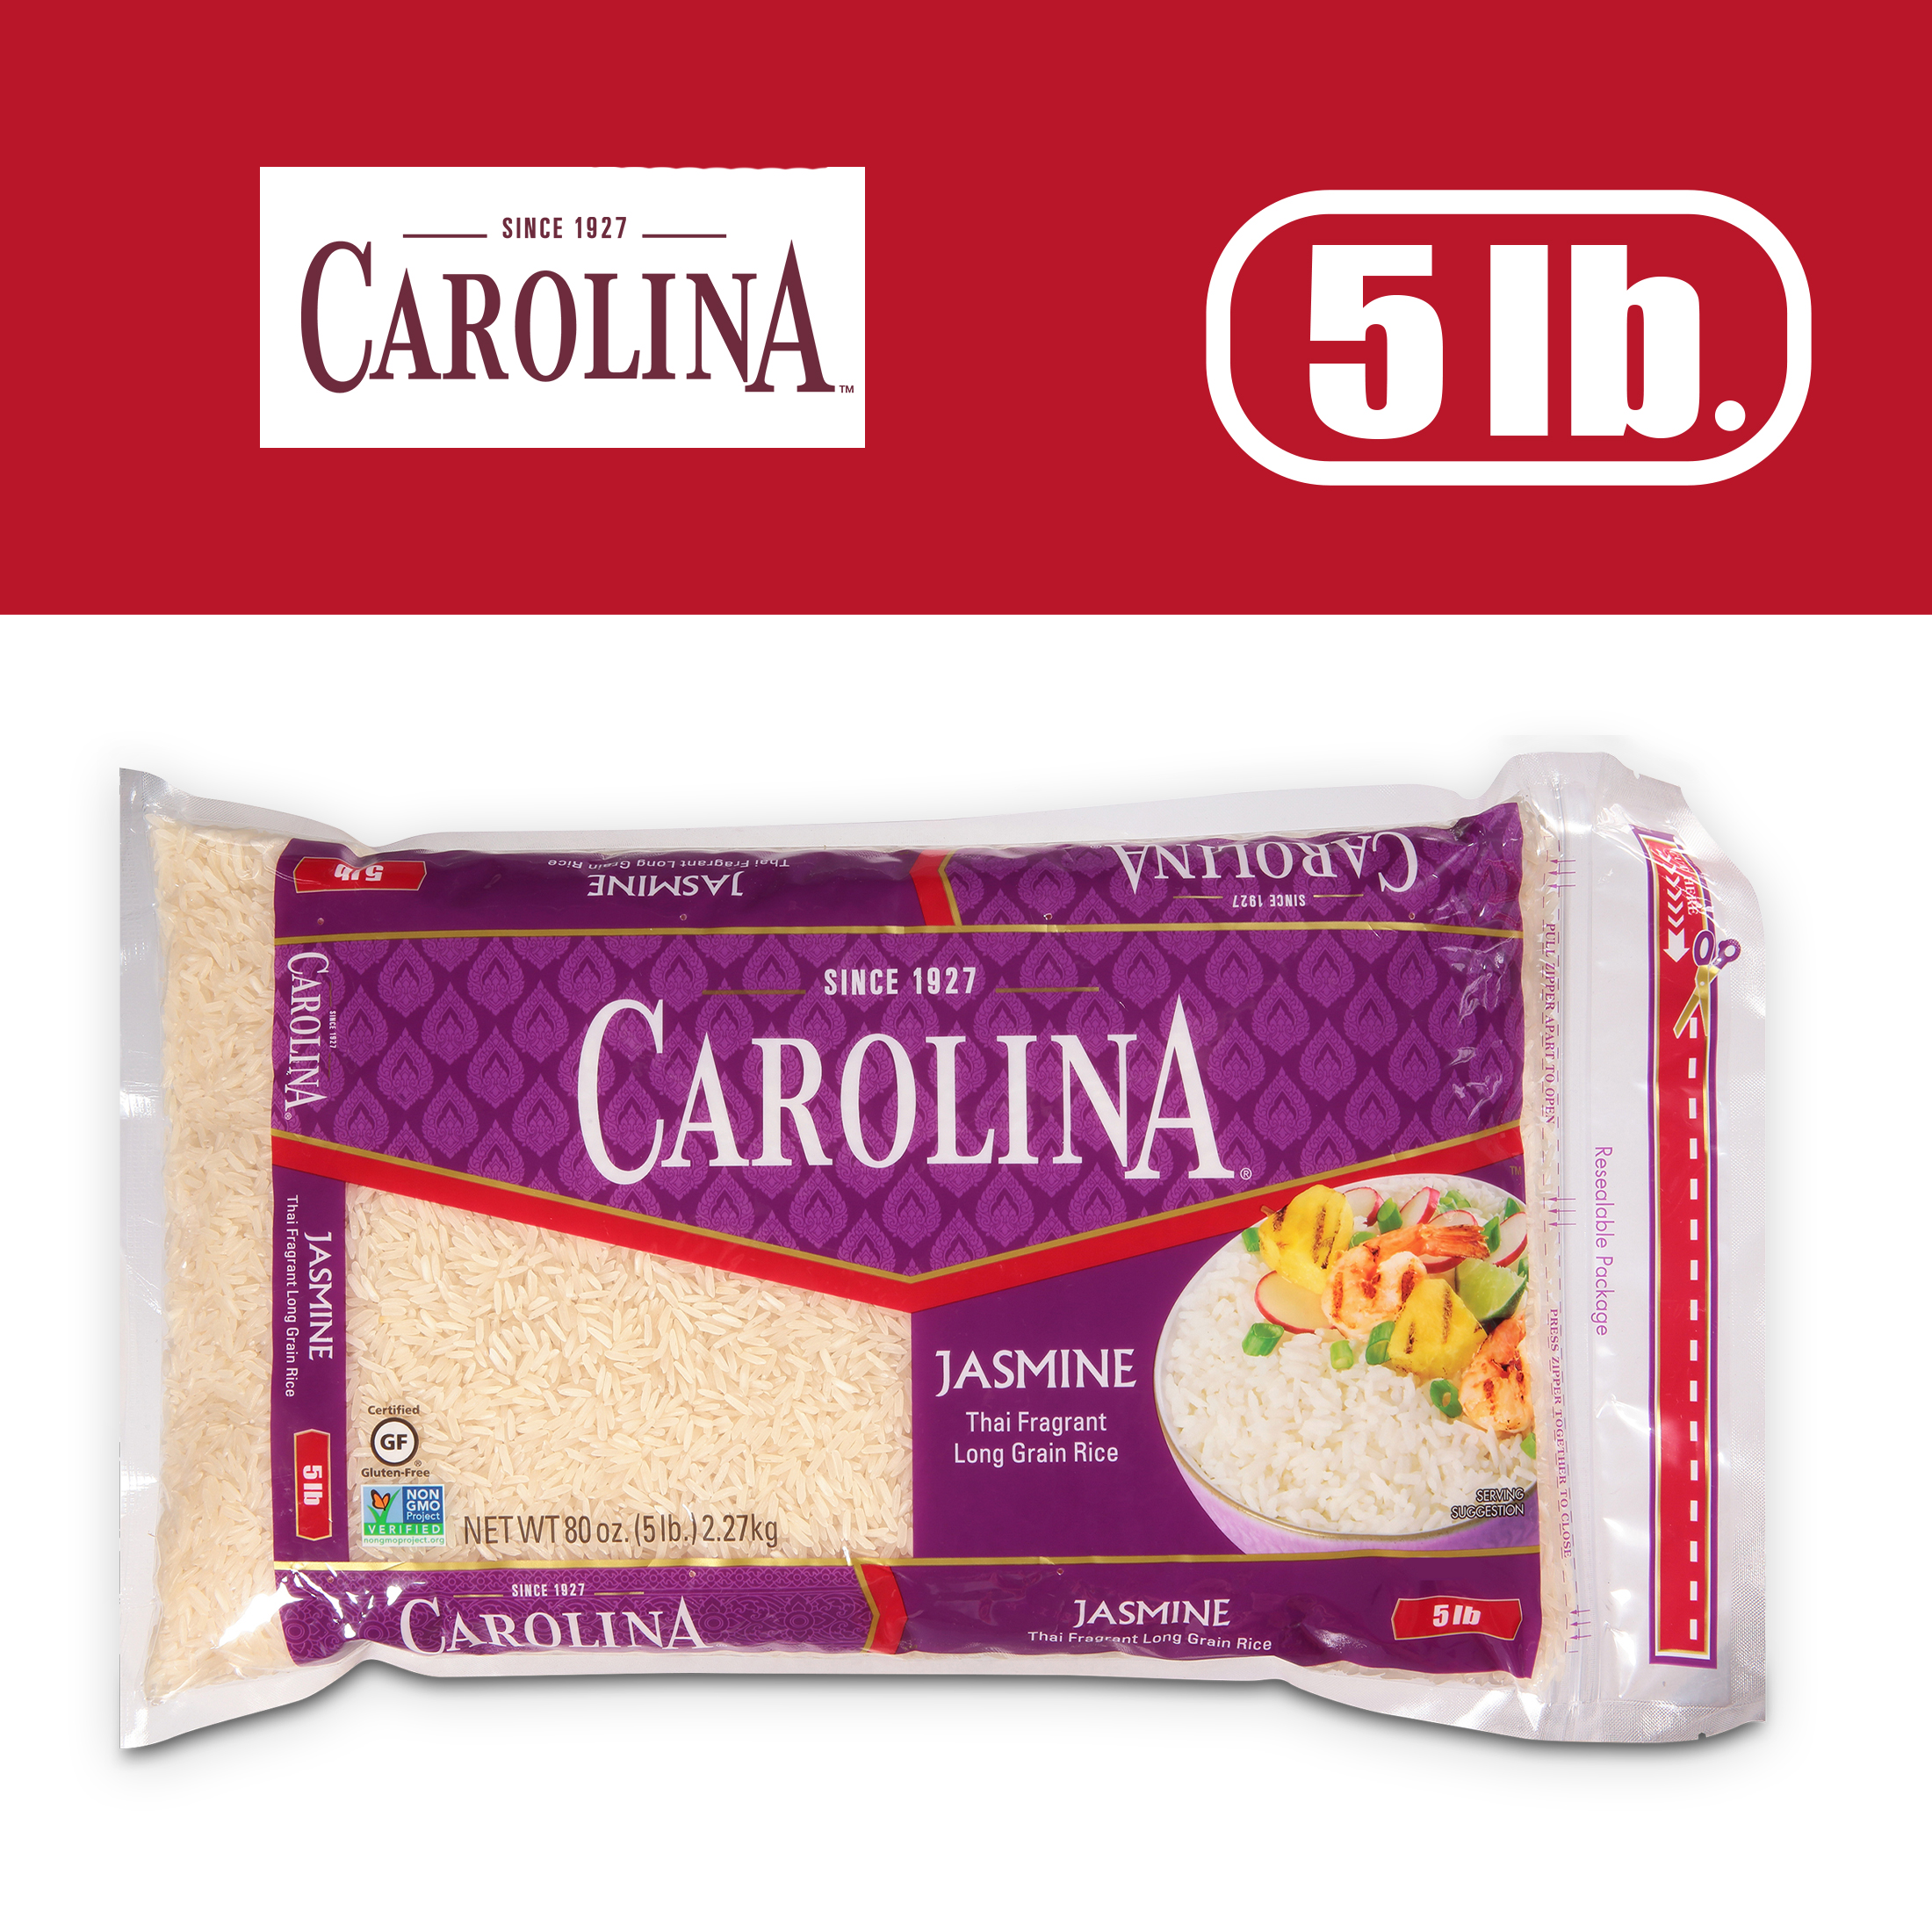 Carolina Jasmine White Rice, Thai Fragrant Long Grain Rice, 5 lb Bag - image 3 of 7